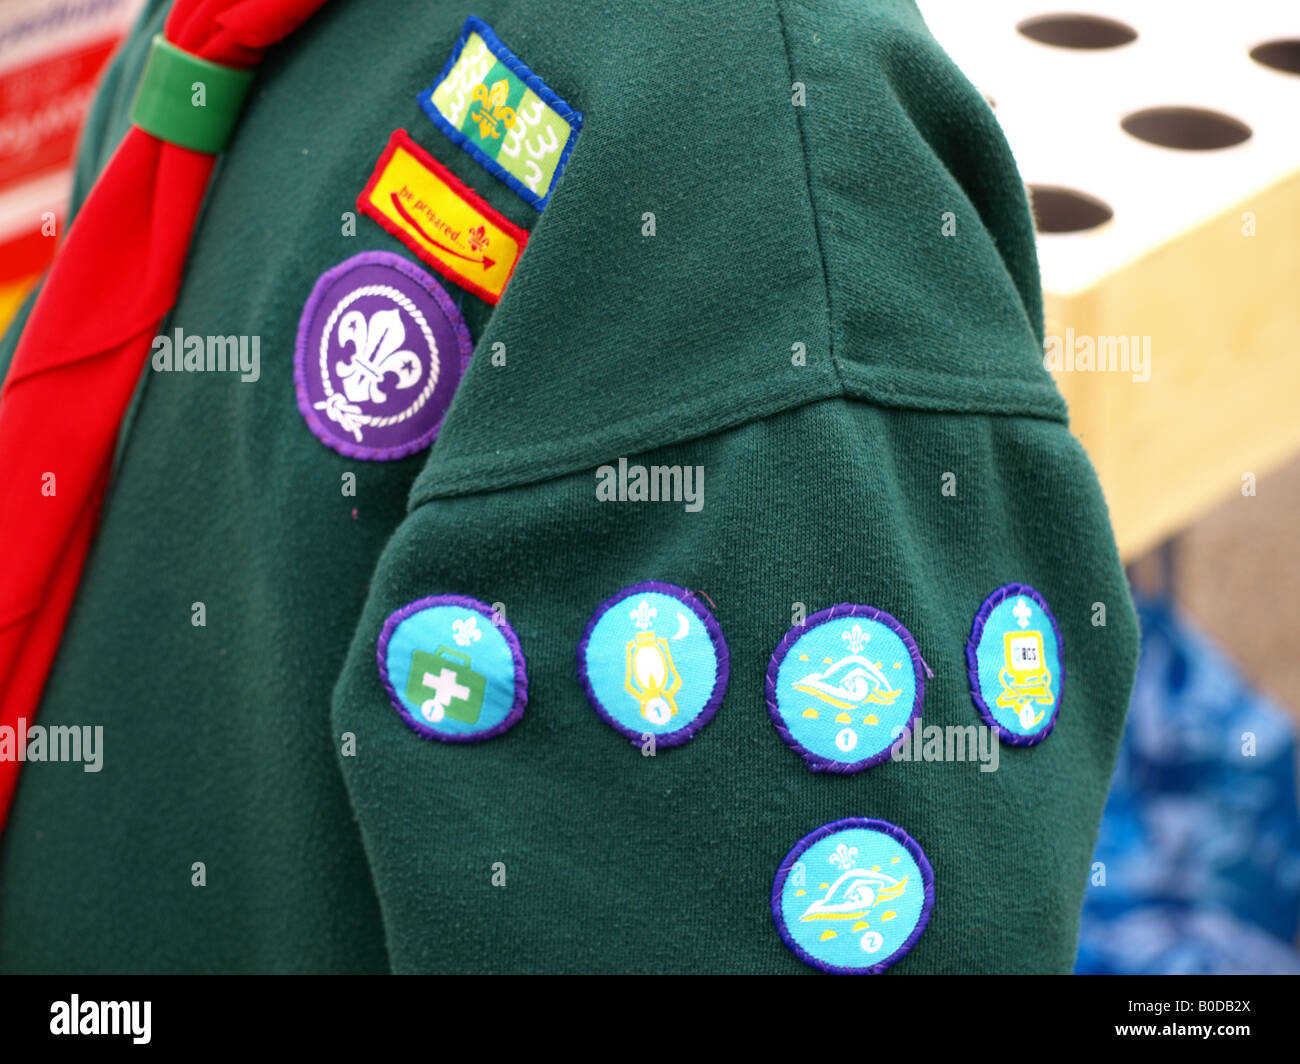 Boy Scouts: Earn Your Art Badge – Art Kit — Banana Factory